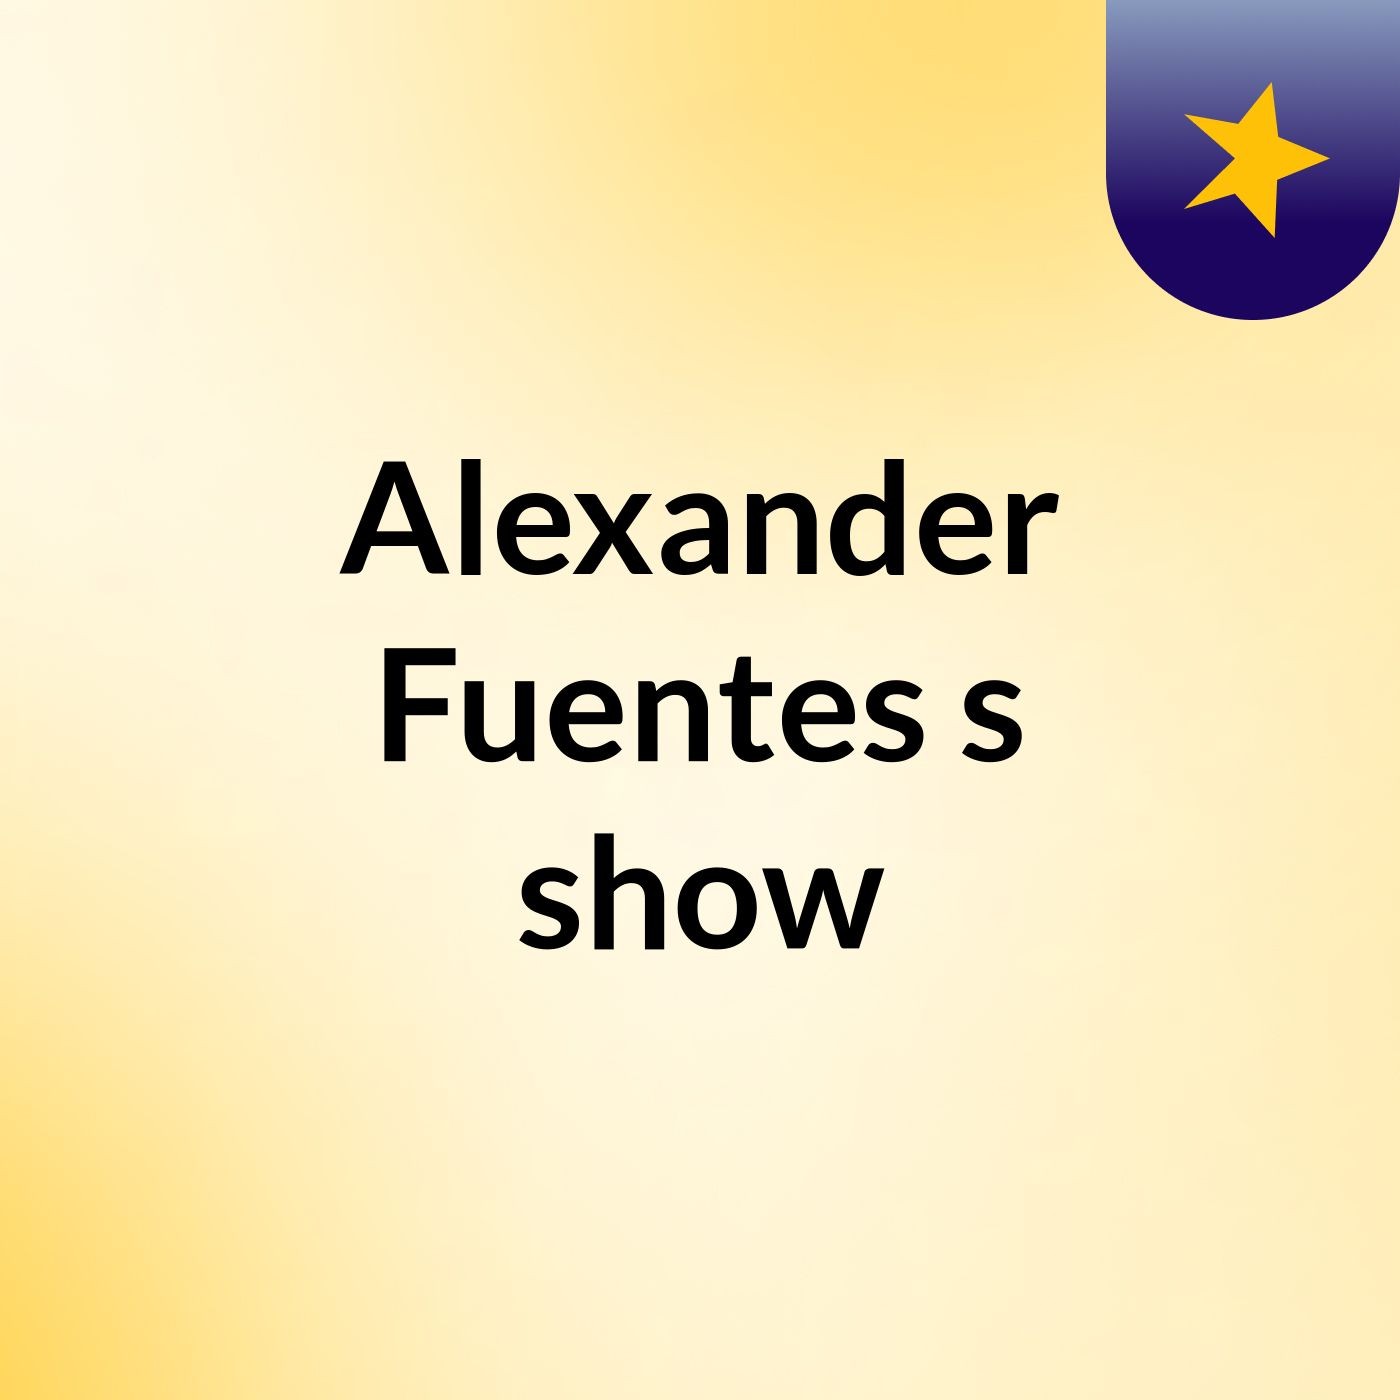 Alexander Fuentes's show